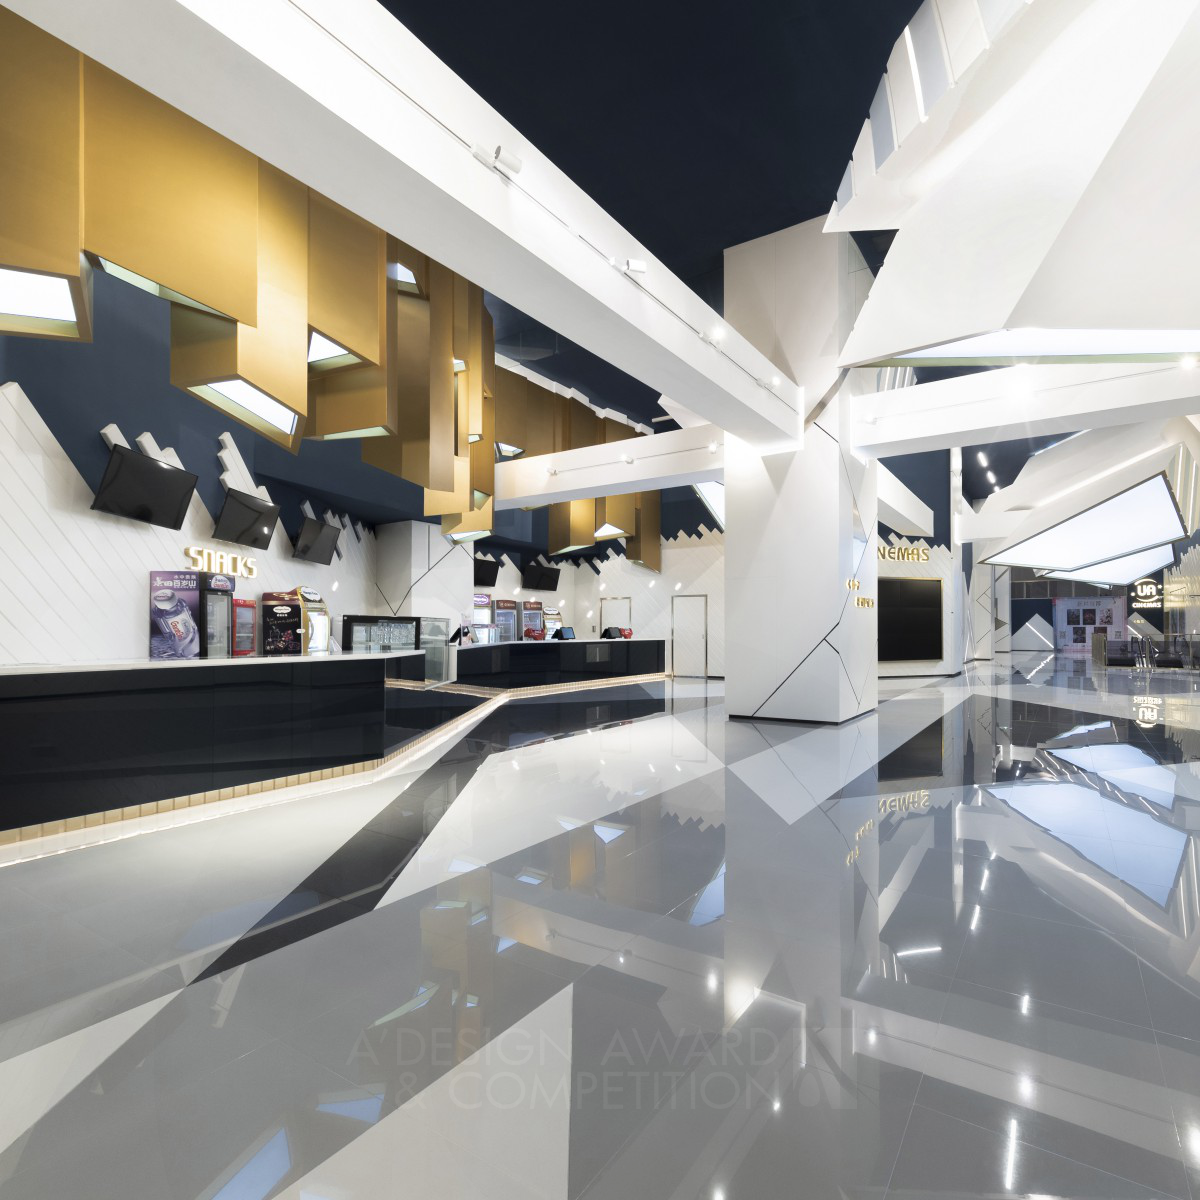 Beauty of Deconstructivism - UA Cinemas Interior Design by Oft Interiors Ltd.